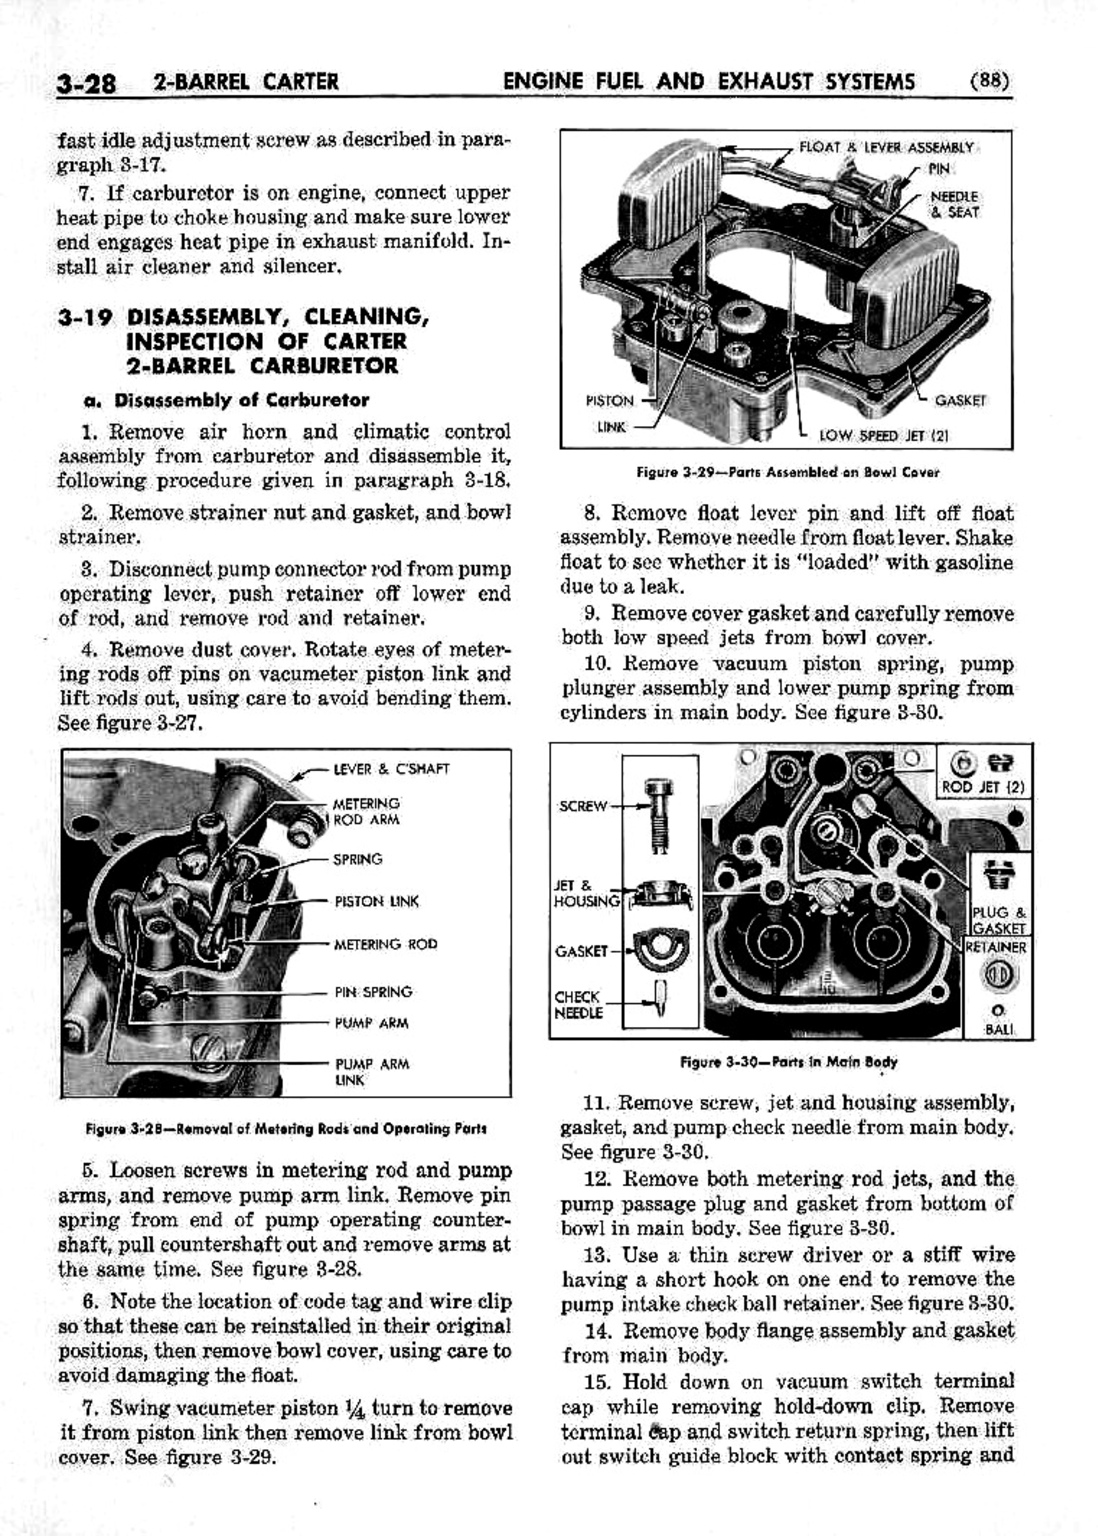 n_04 1953 Buick Shop Manual - Engine Fuel & Exhaust-028-028.jpg